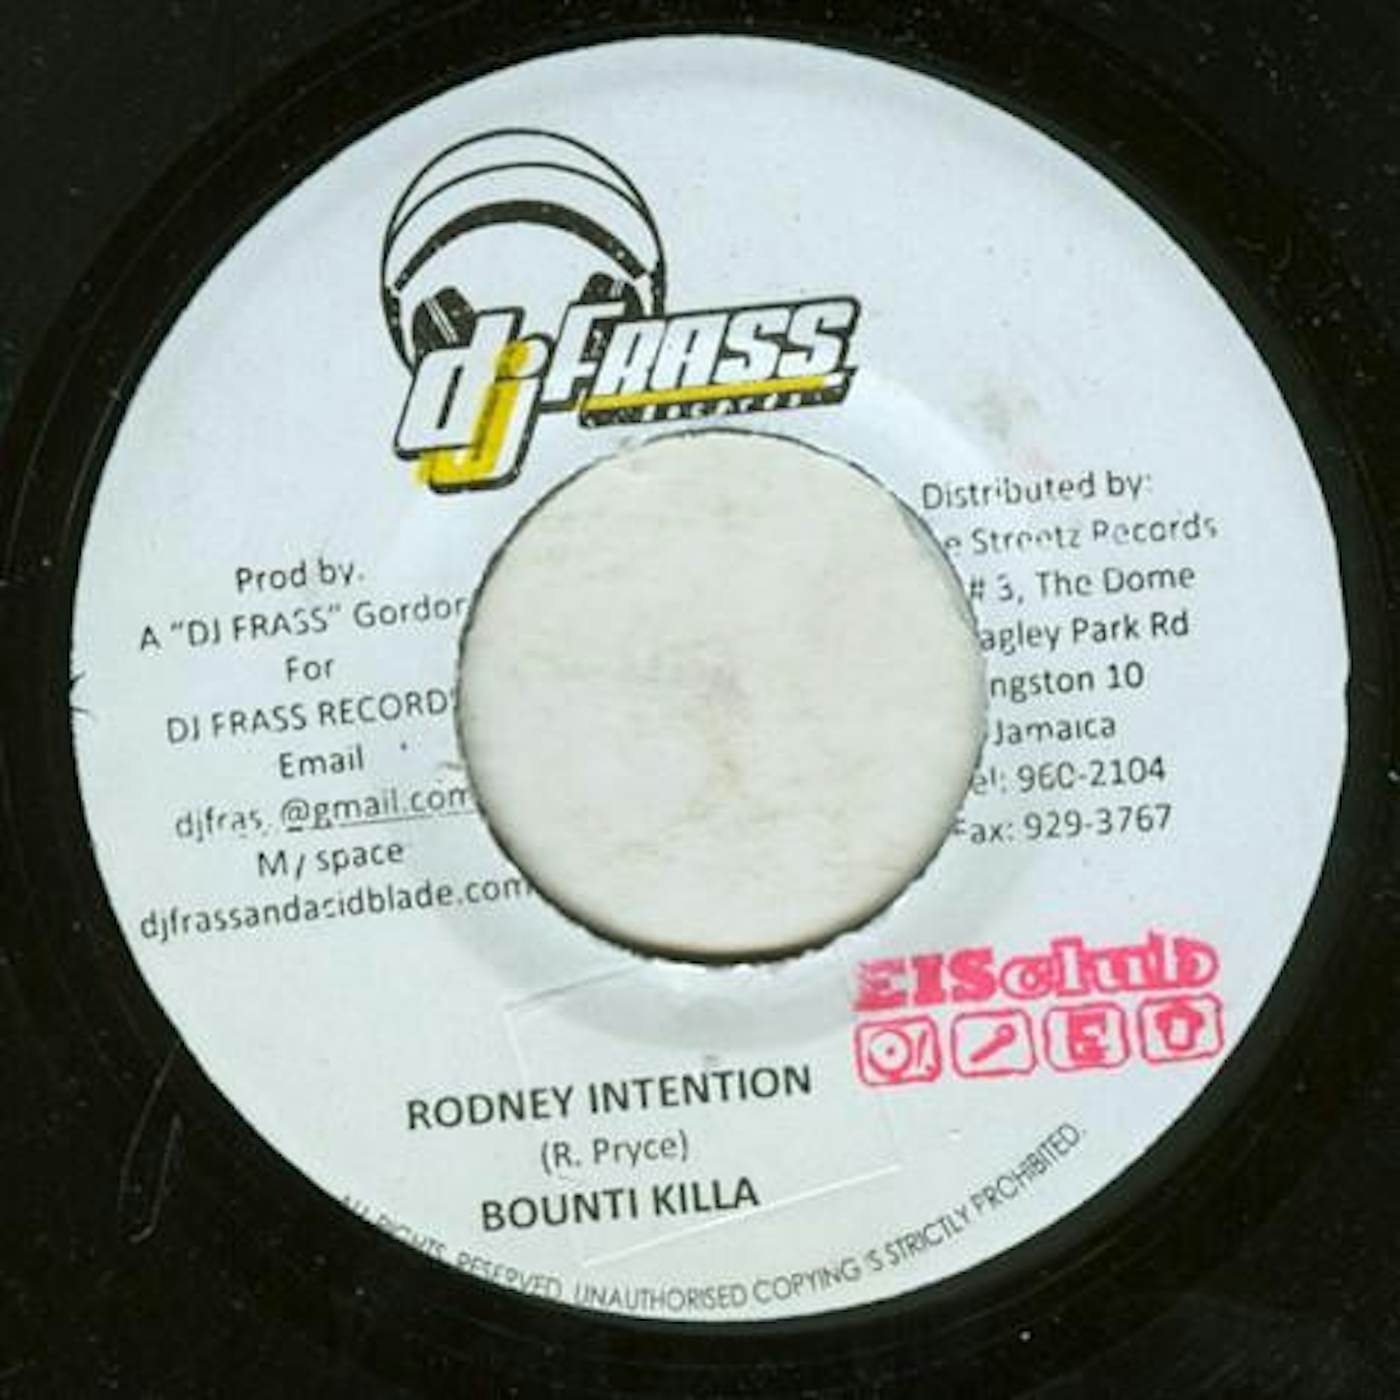 Bounty Killer RODNEY INTENTION Vinyl Record